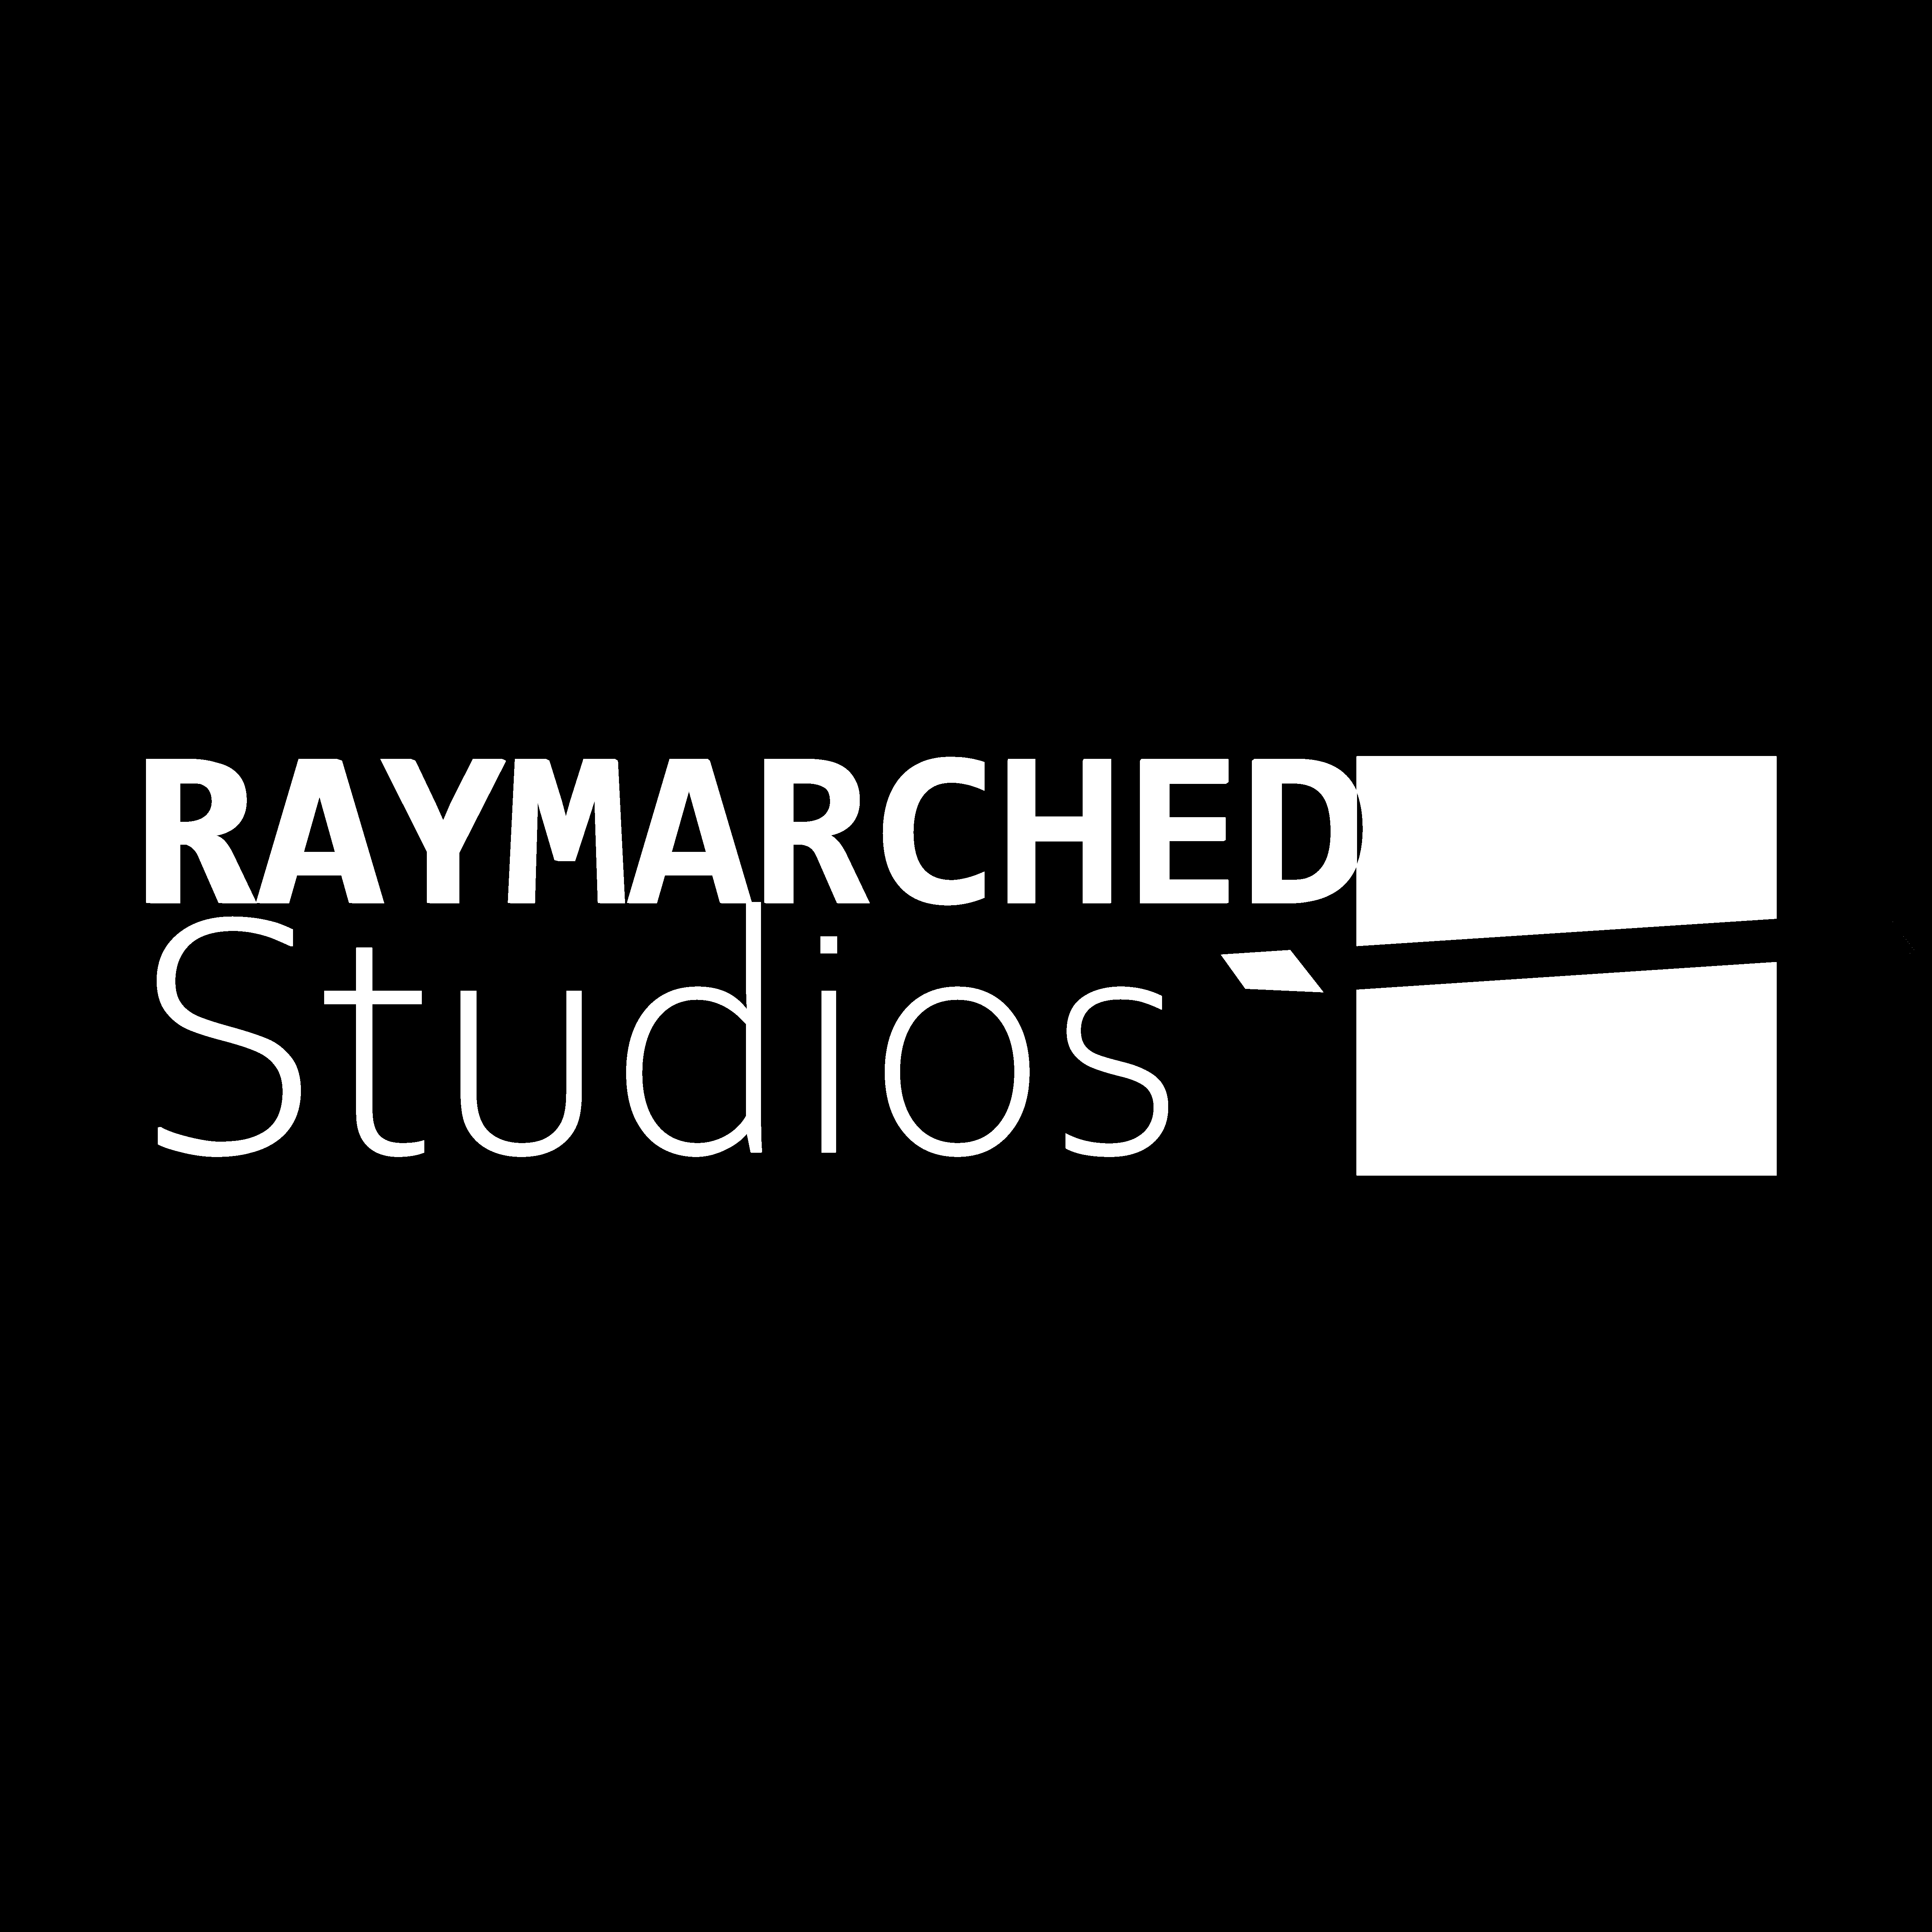 RaymarchedStudioscompressed